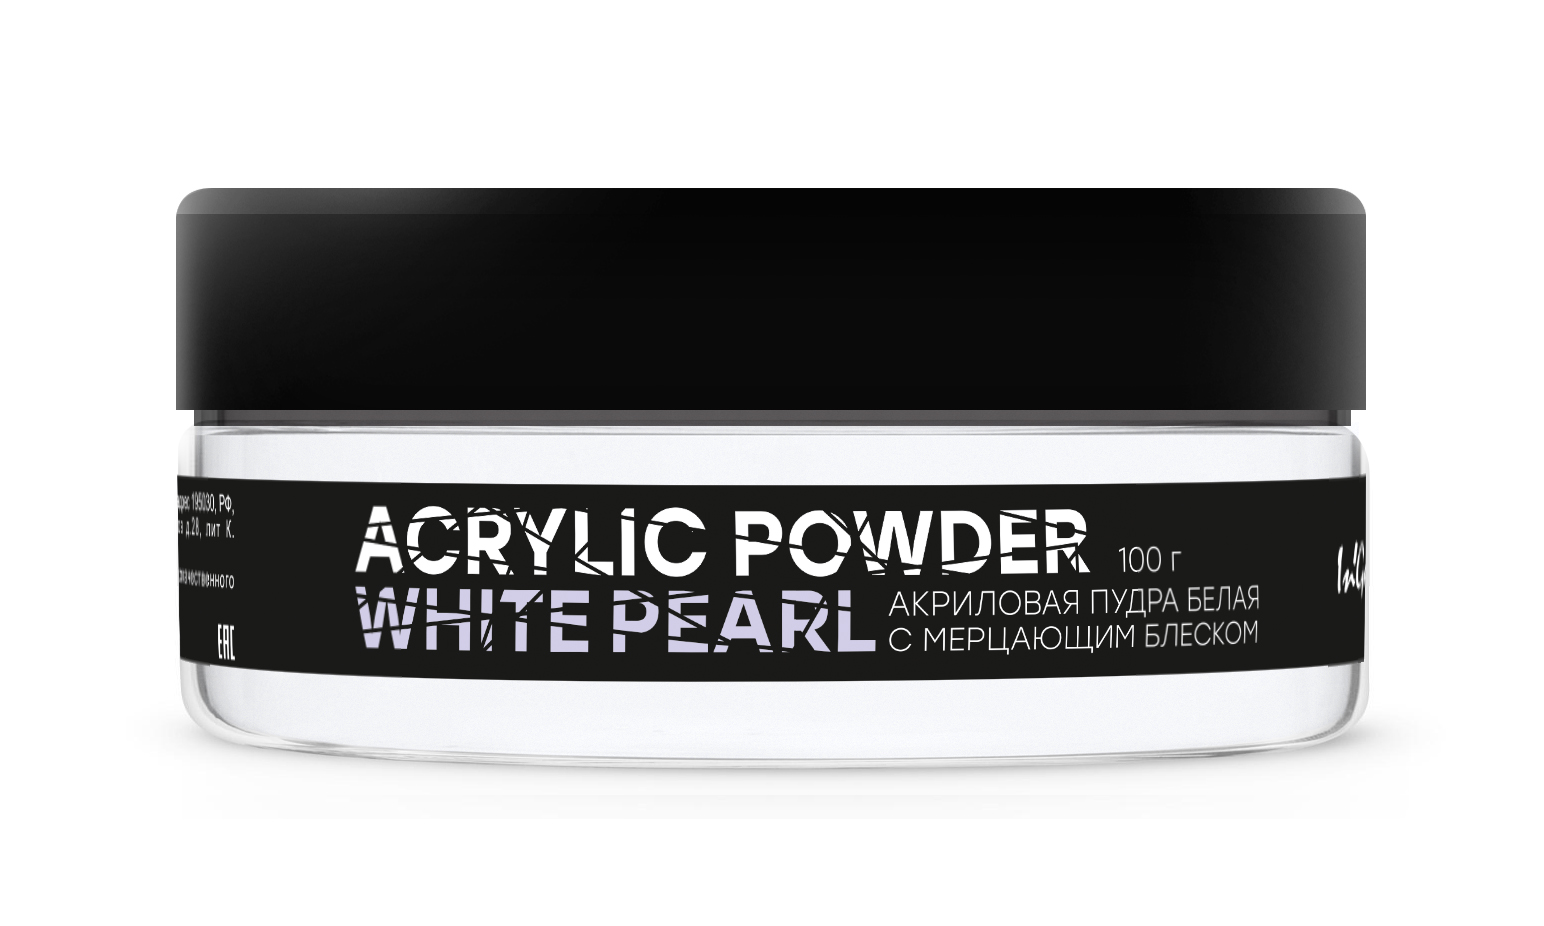 Акриловая пудра белая с мерцанием Acrylic Powder Classic White Pearl, 100 г акриловая пудра 04 персиково оранжевая 8 гр